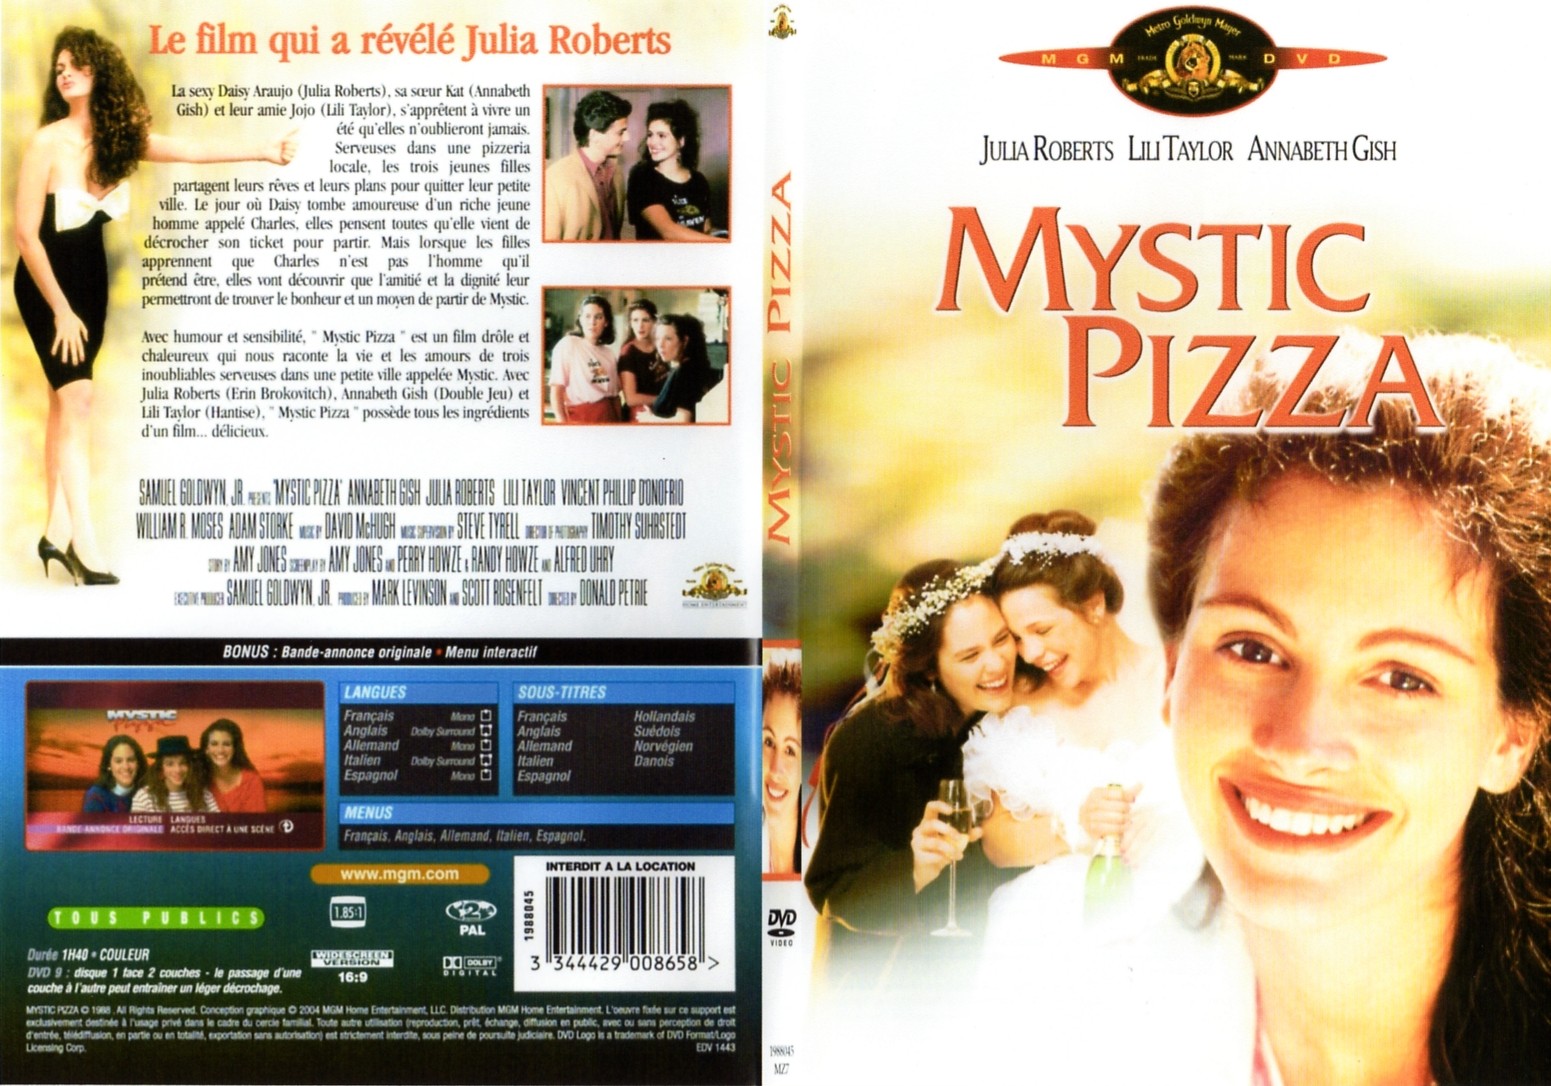 Jaquette DVD Mystic pizza - SLIM